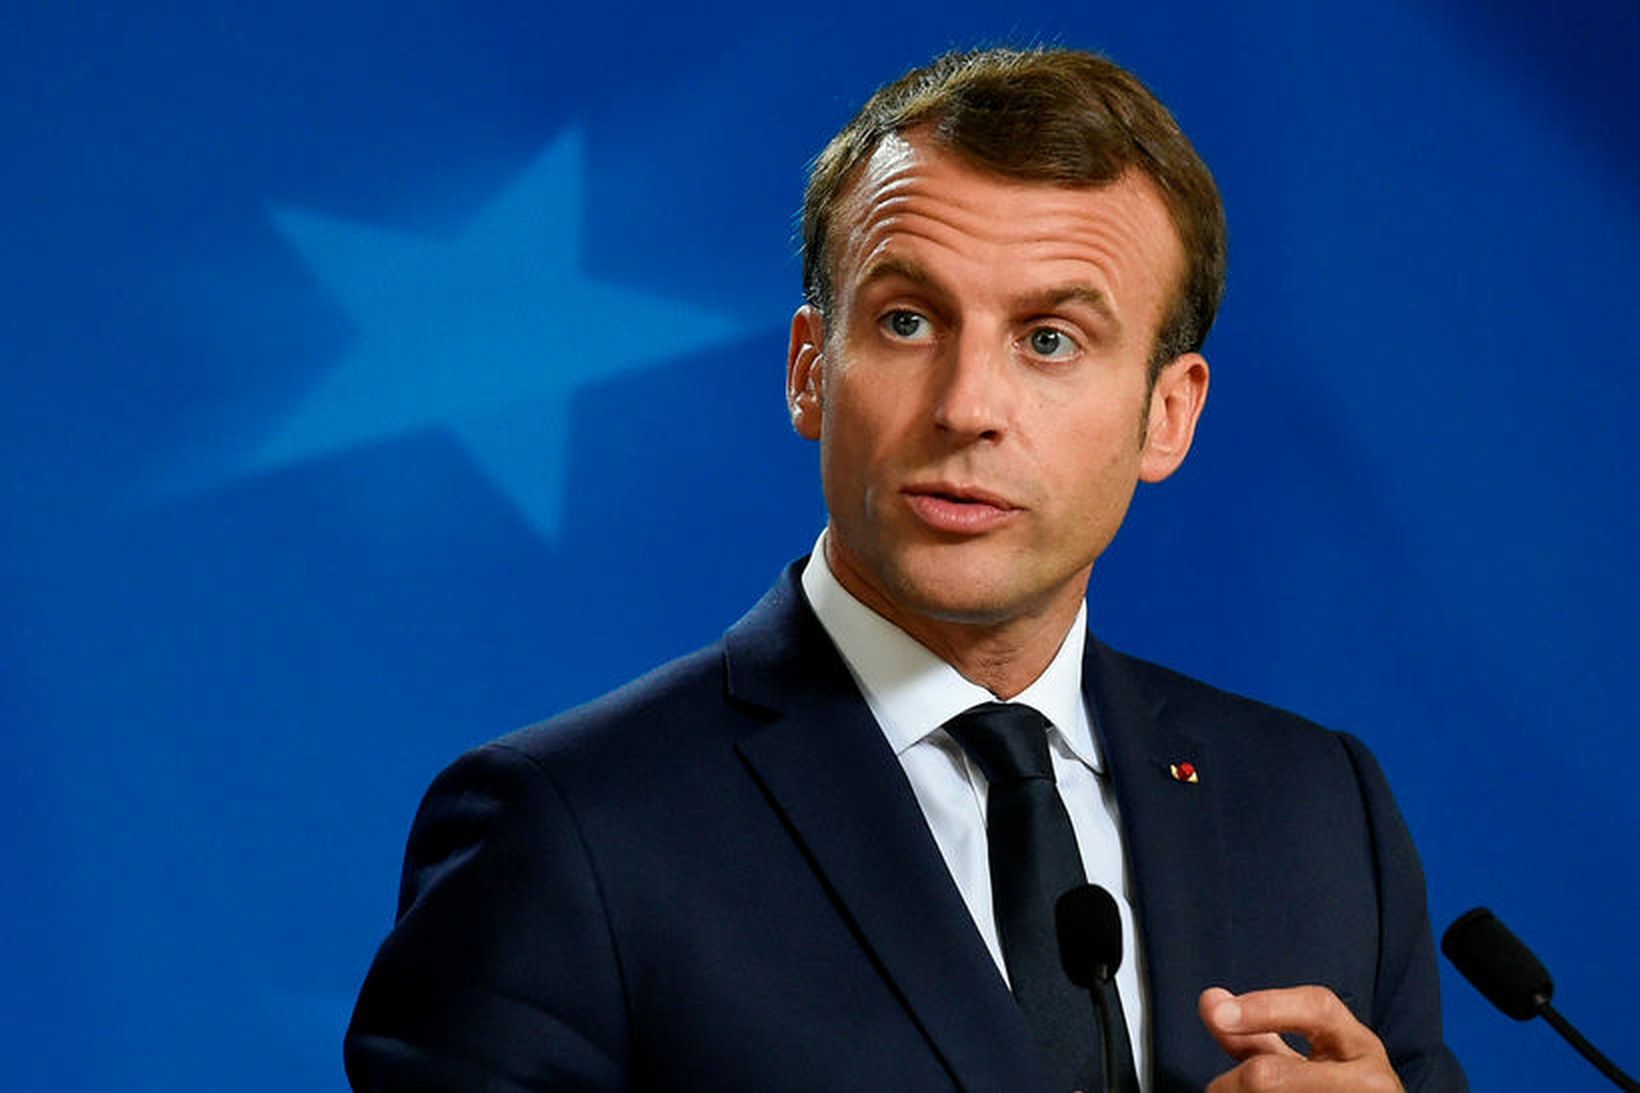 Emmanuel Macron Frakklandsforseti segir atvikið vera „óásættanlegt“.